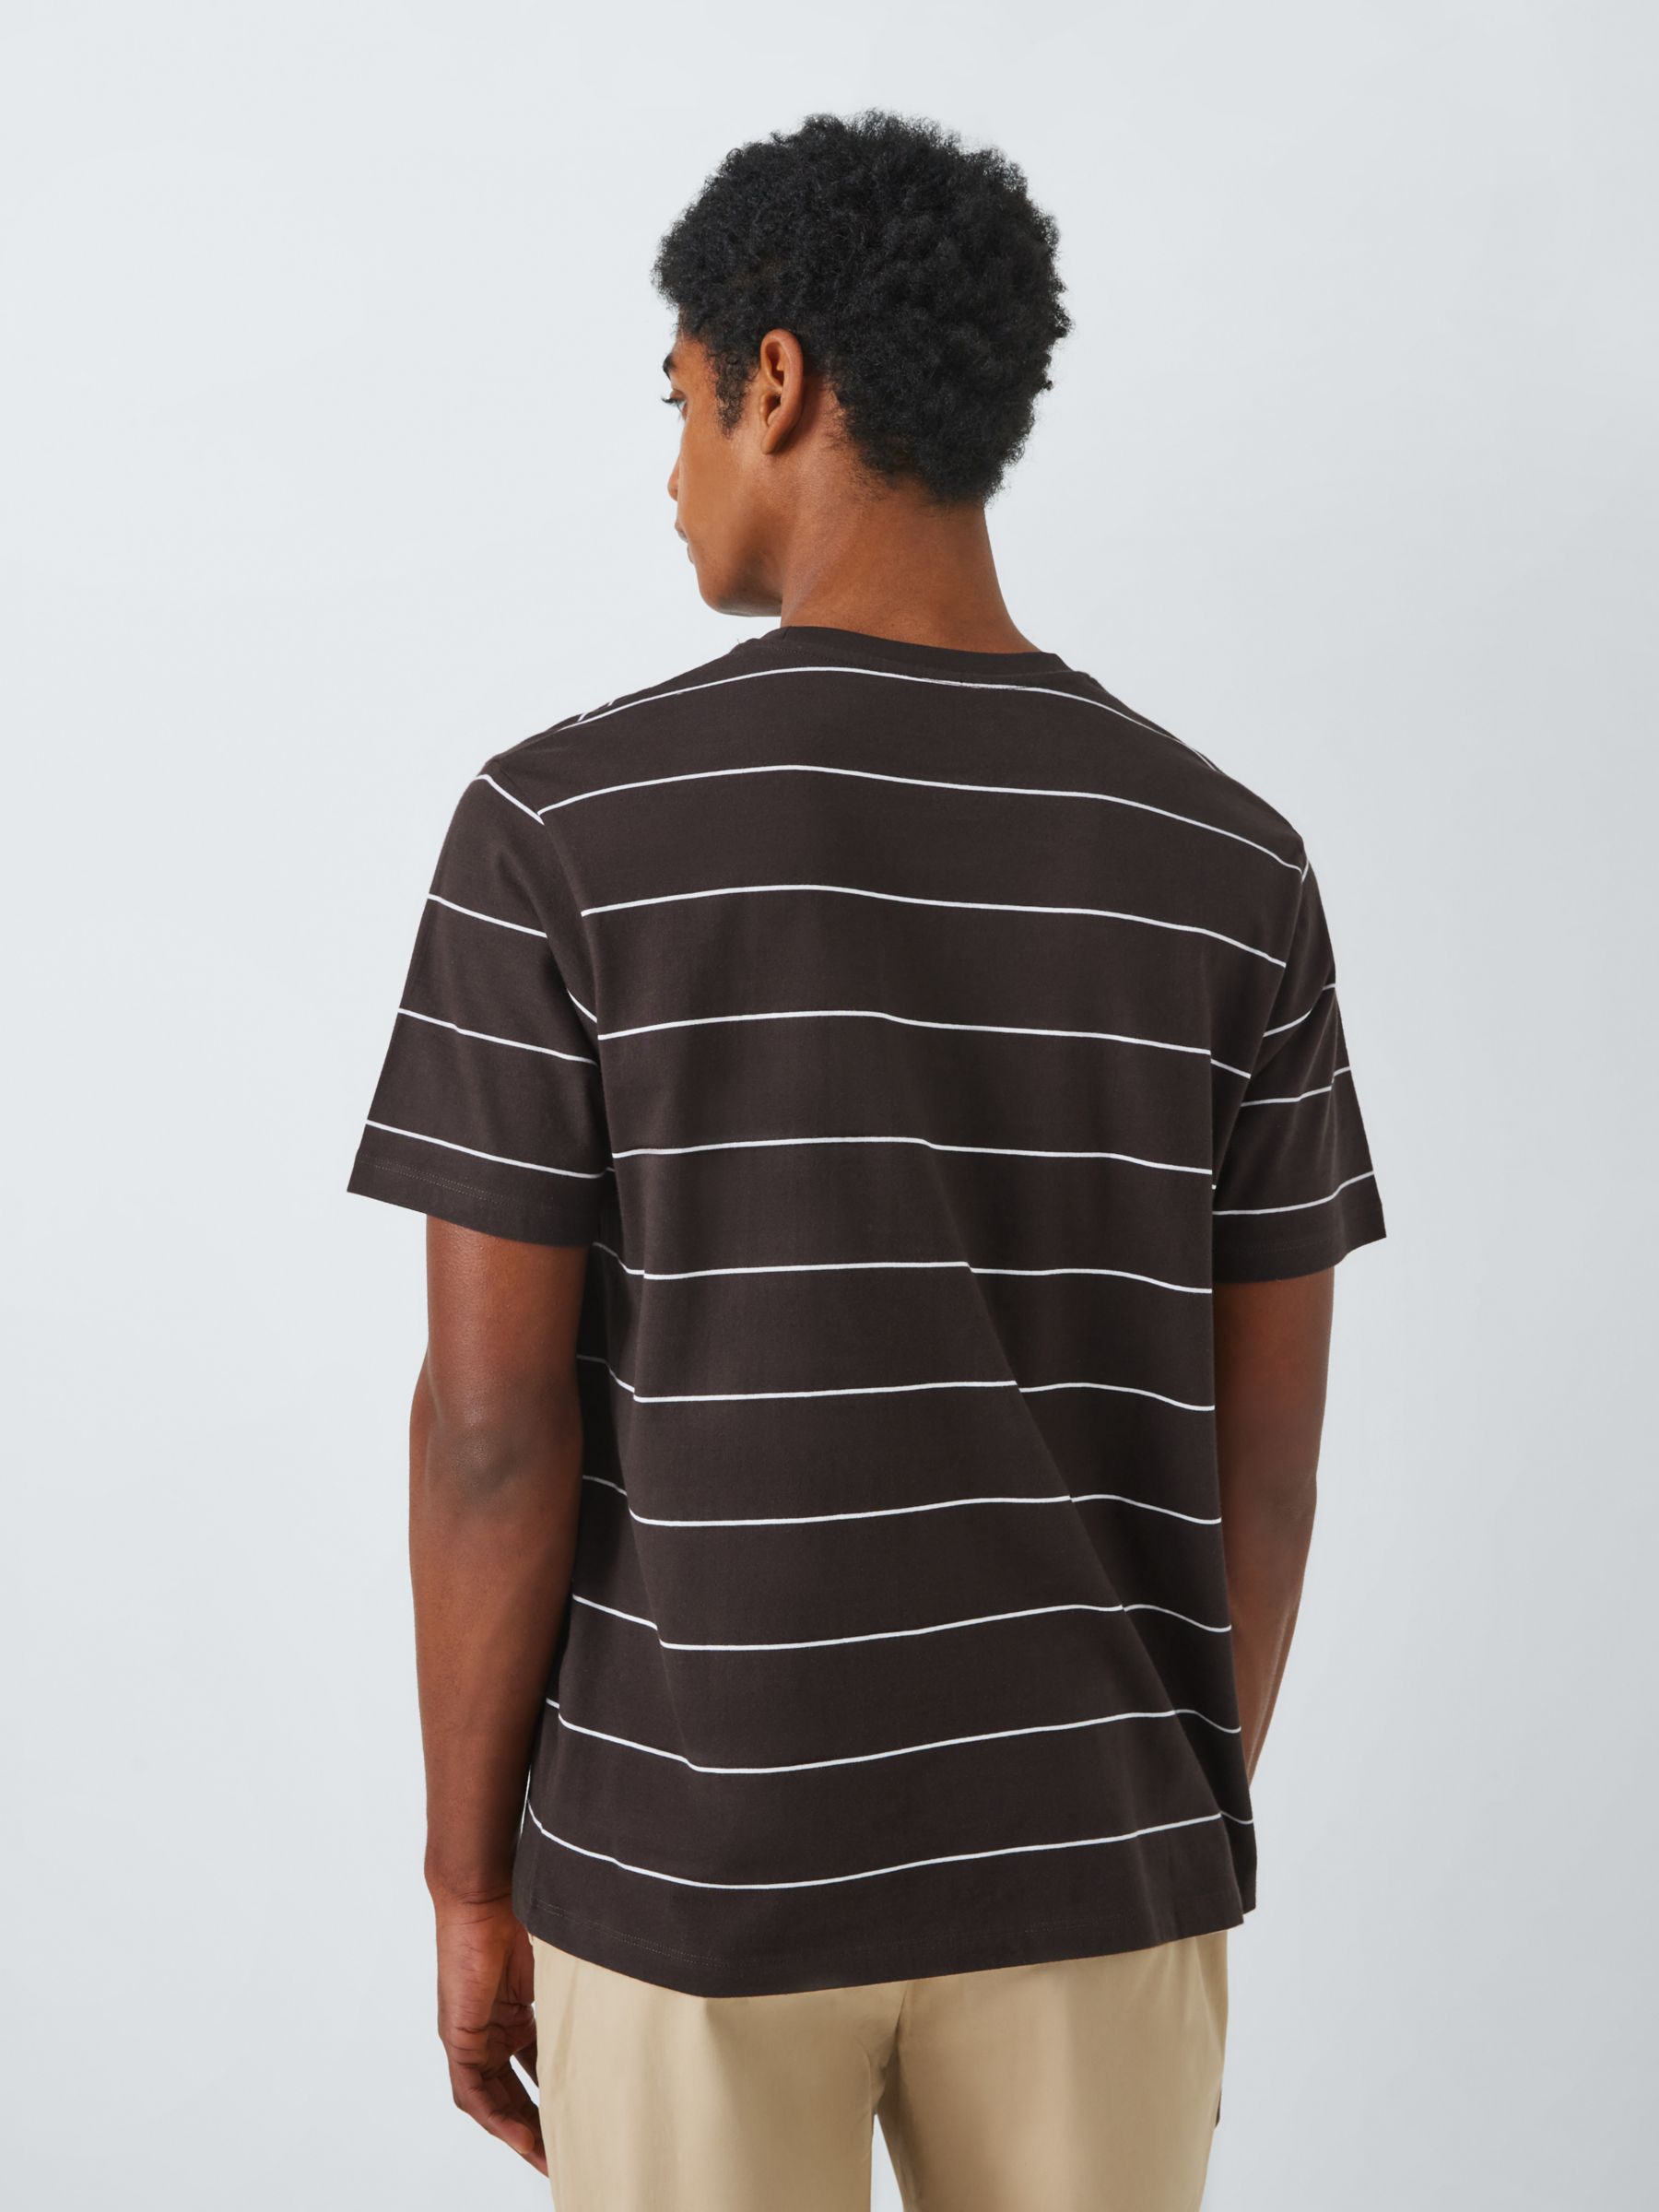 Kin Space Stripe Pocket Short Sleeve T-Shirt, Chocolate/Plum, S